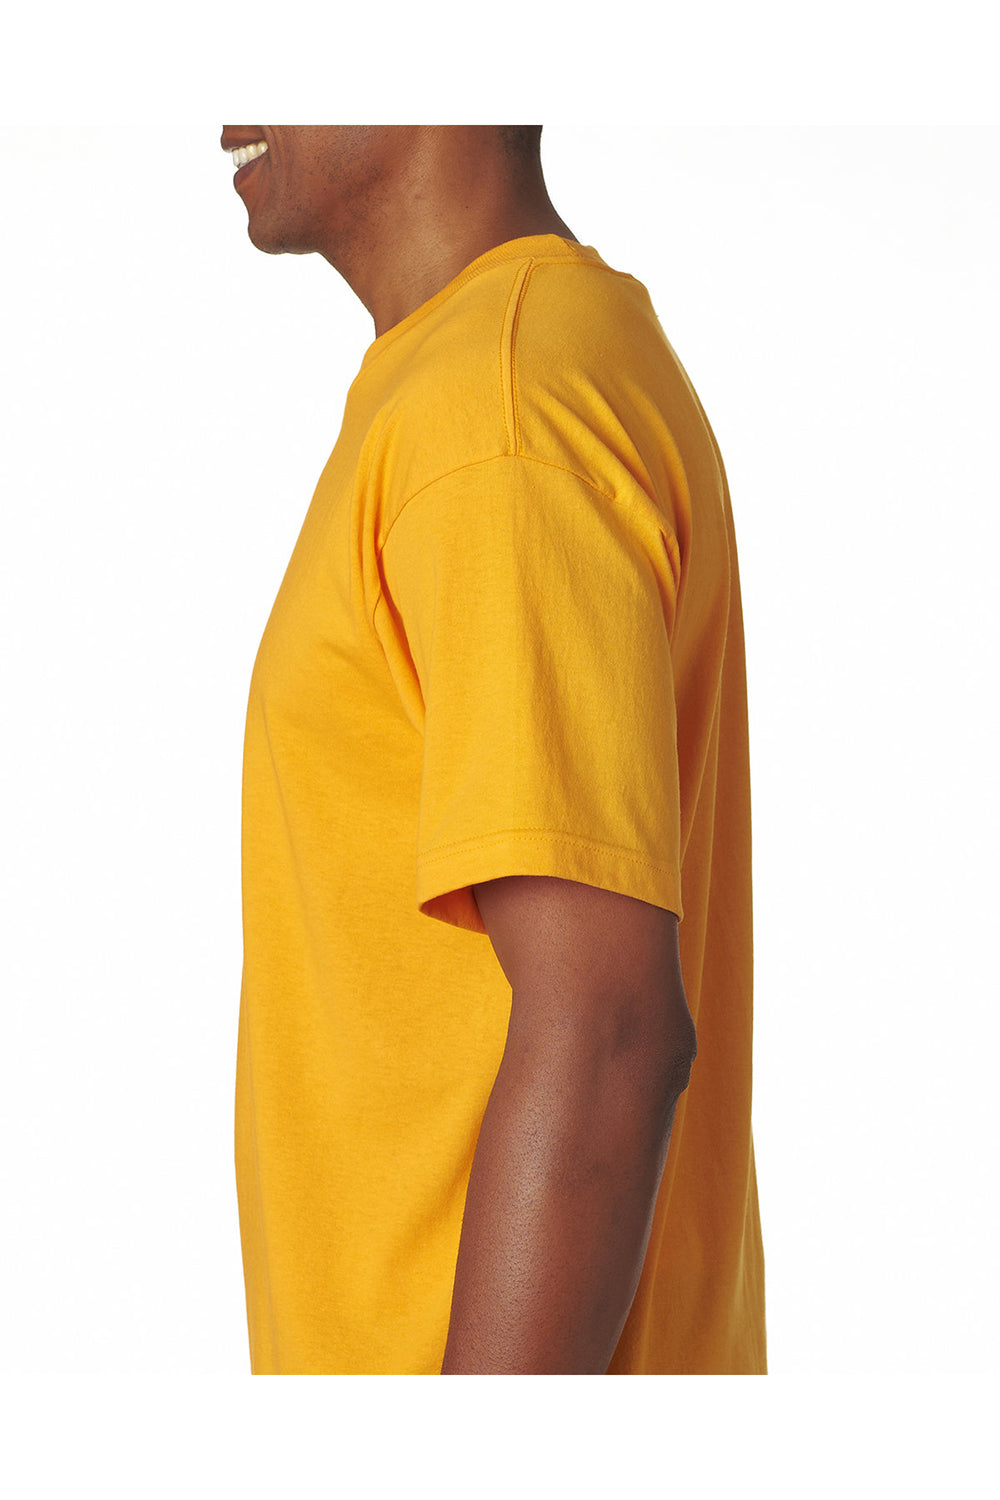 Bayside BA5100 Mens USA Made Short Sleeve Crewneck T-Shirt Gold Model Side